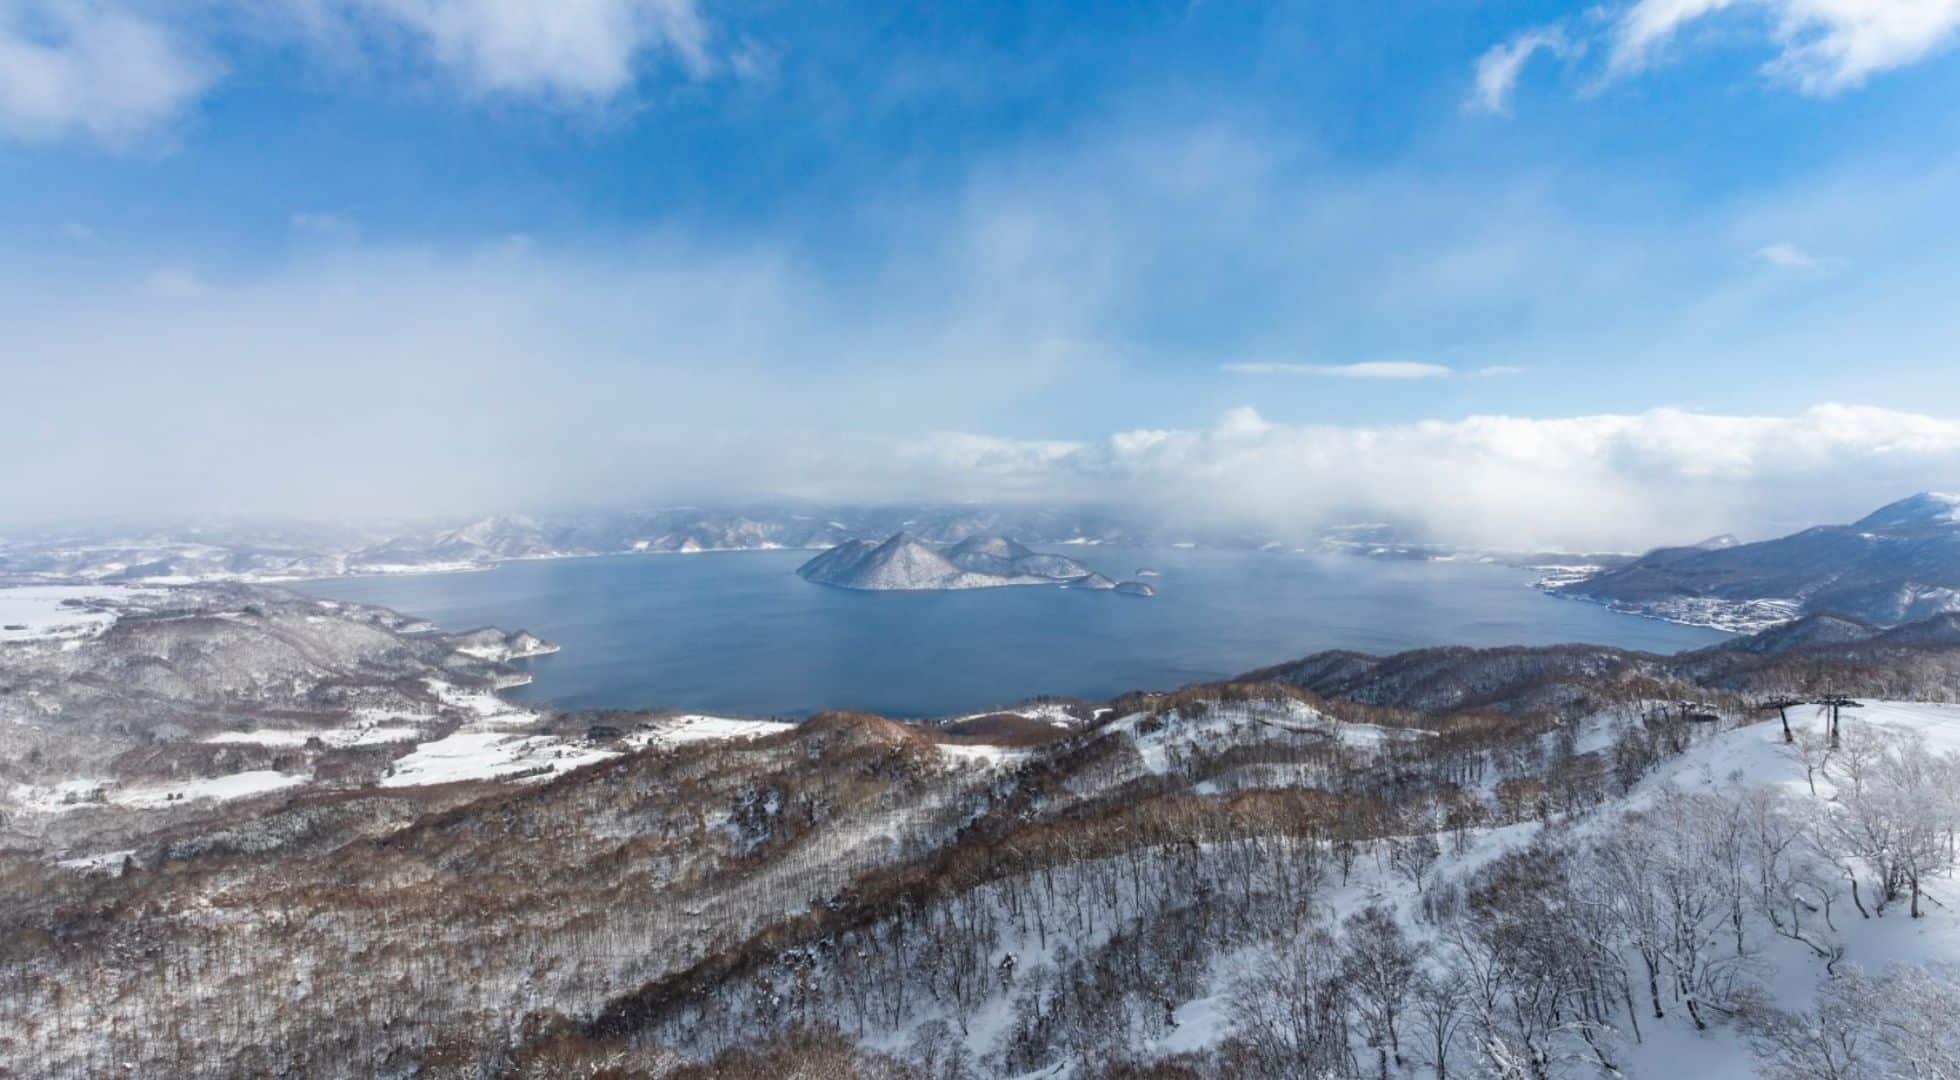 Lake Toya is a popular destination during Japan snow season